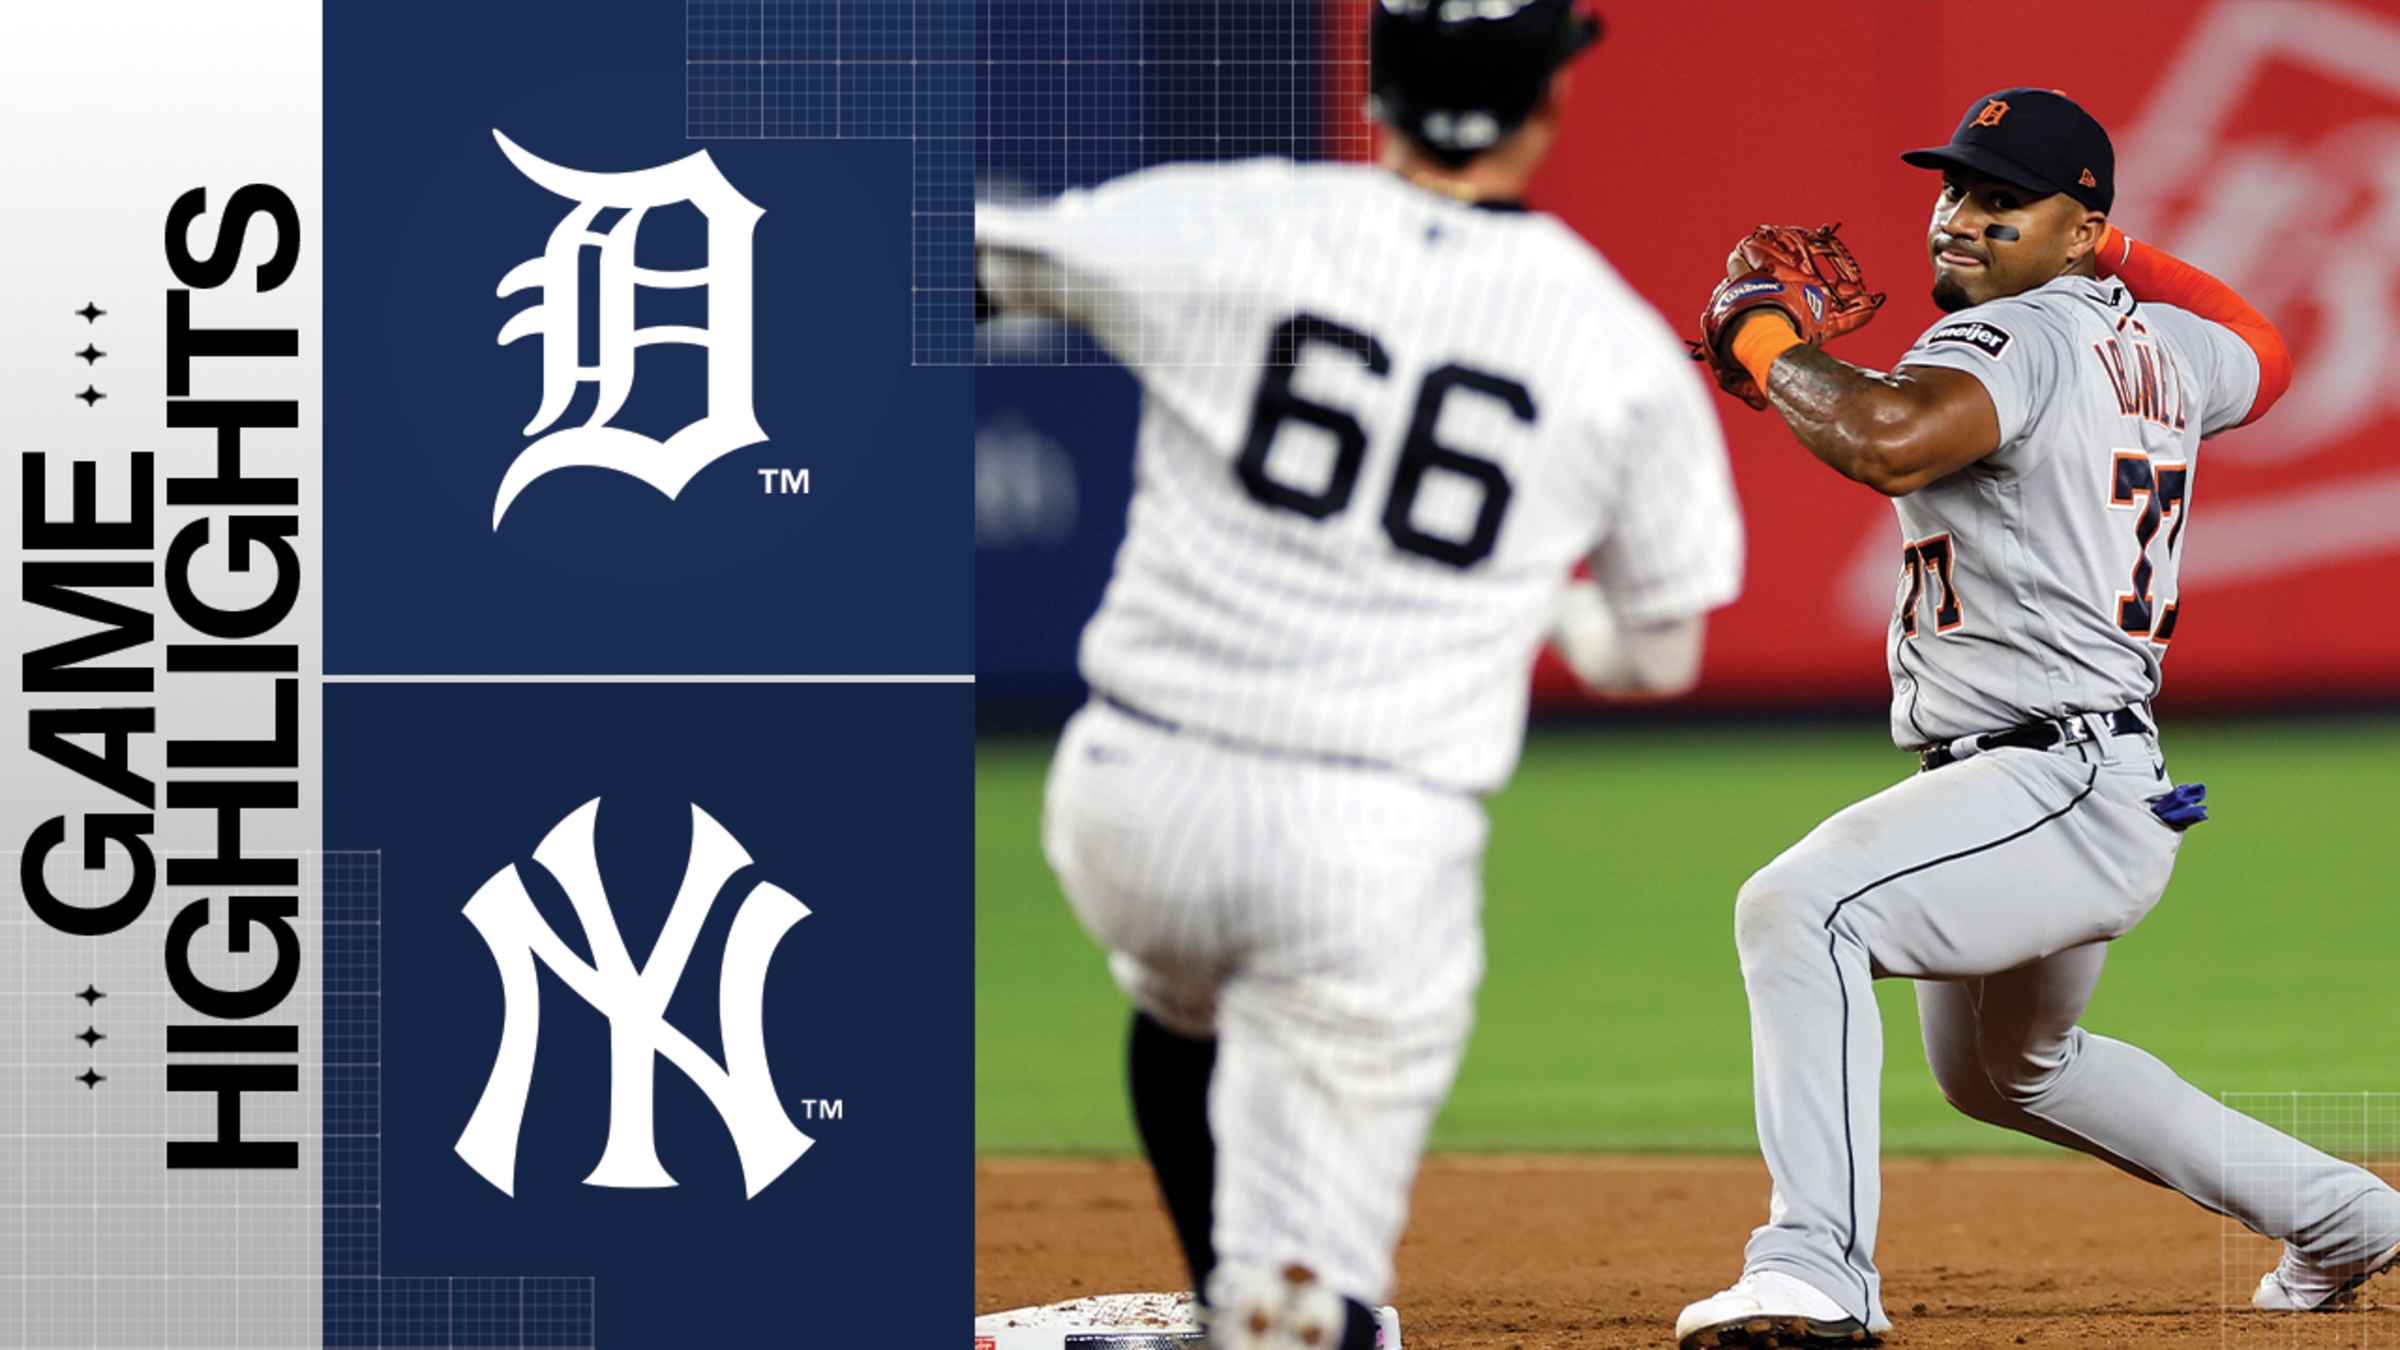 8/9 – Comerica Park: Detroit Tigers vs. New York Yankees